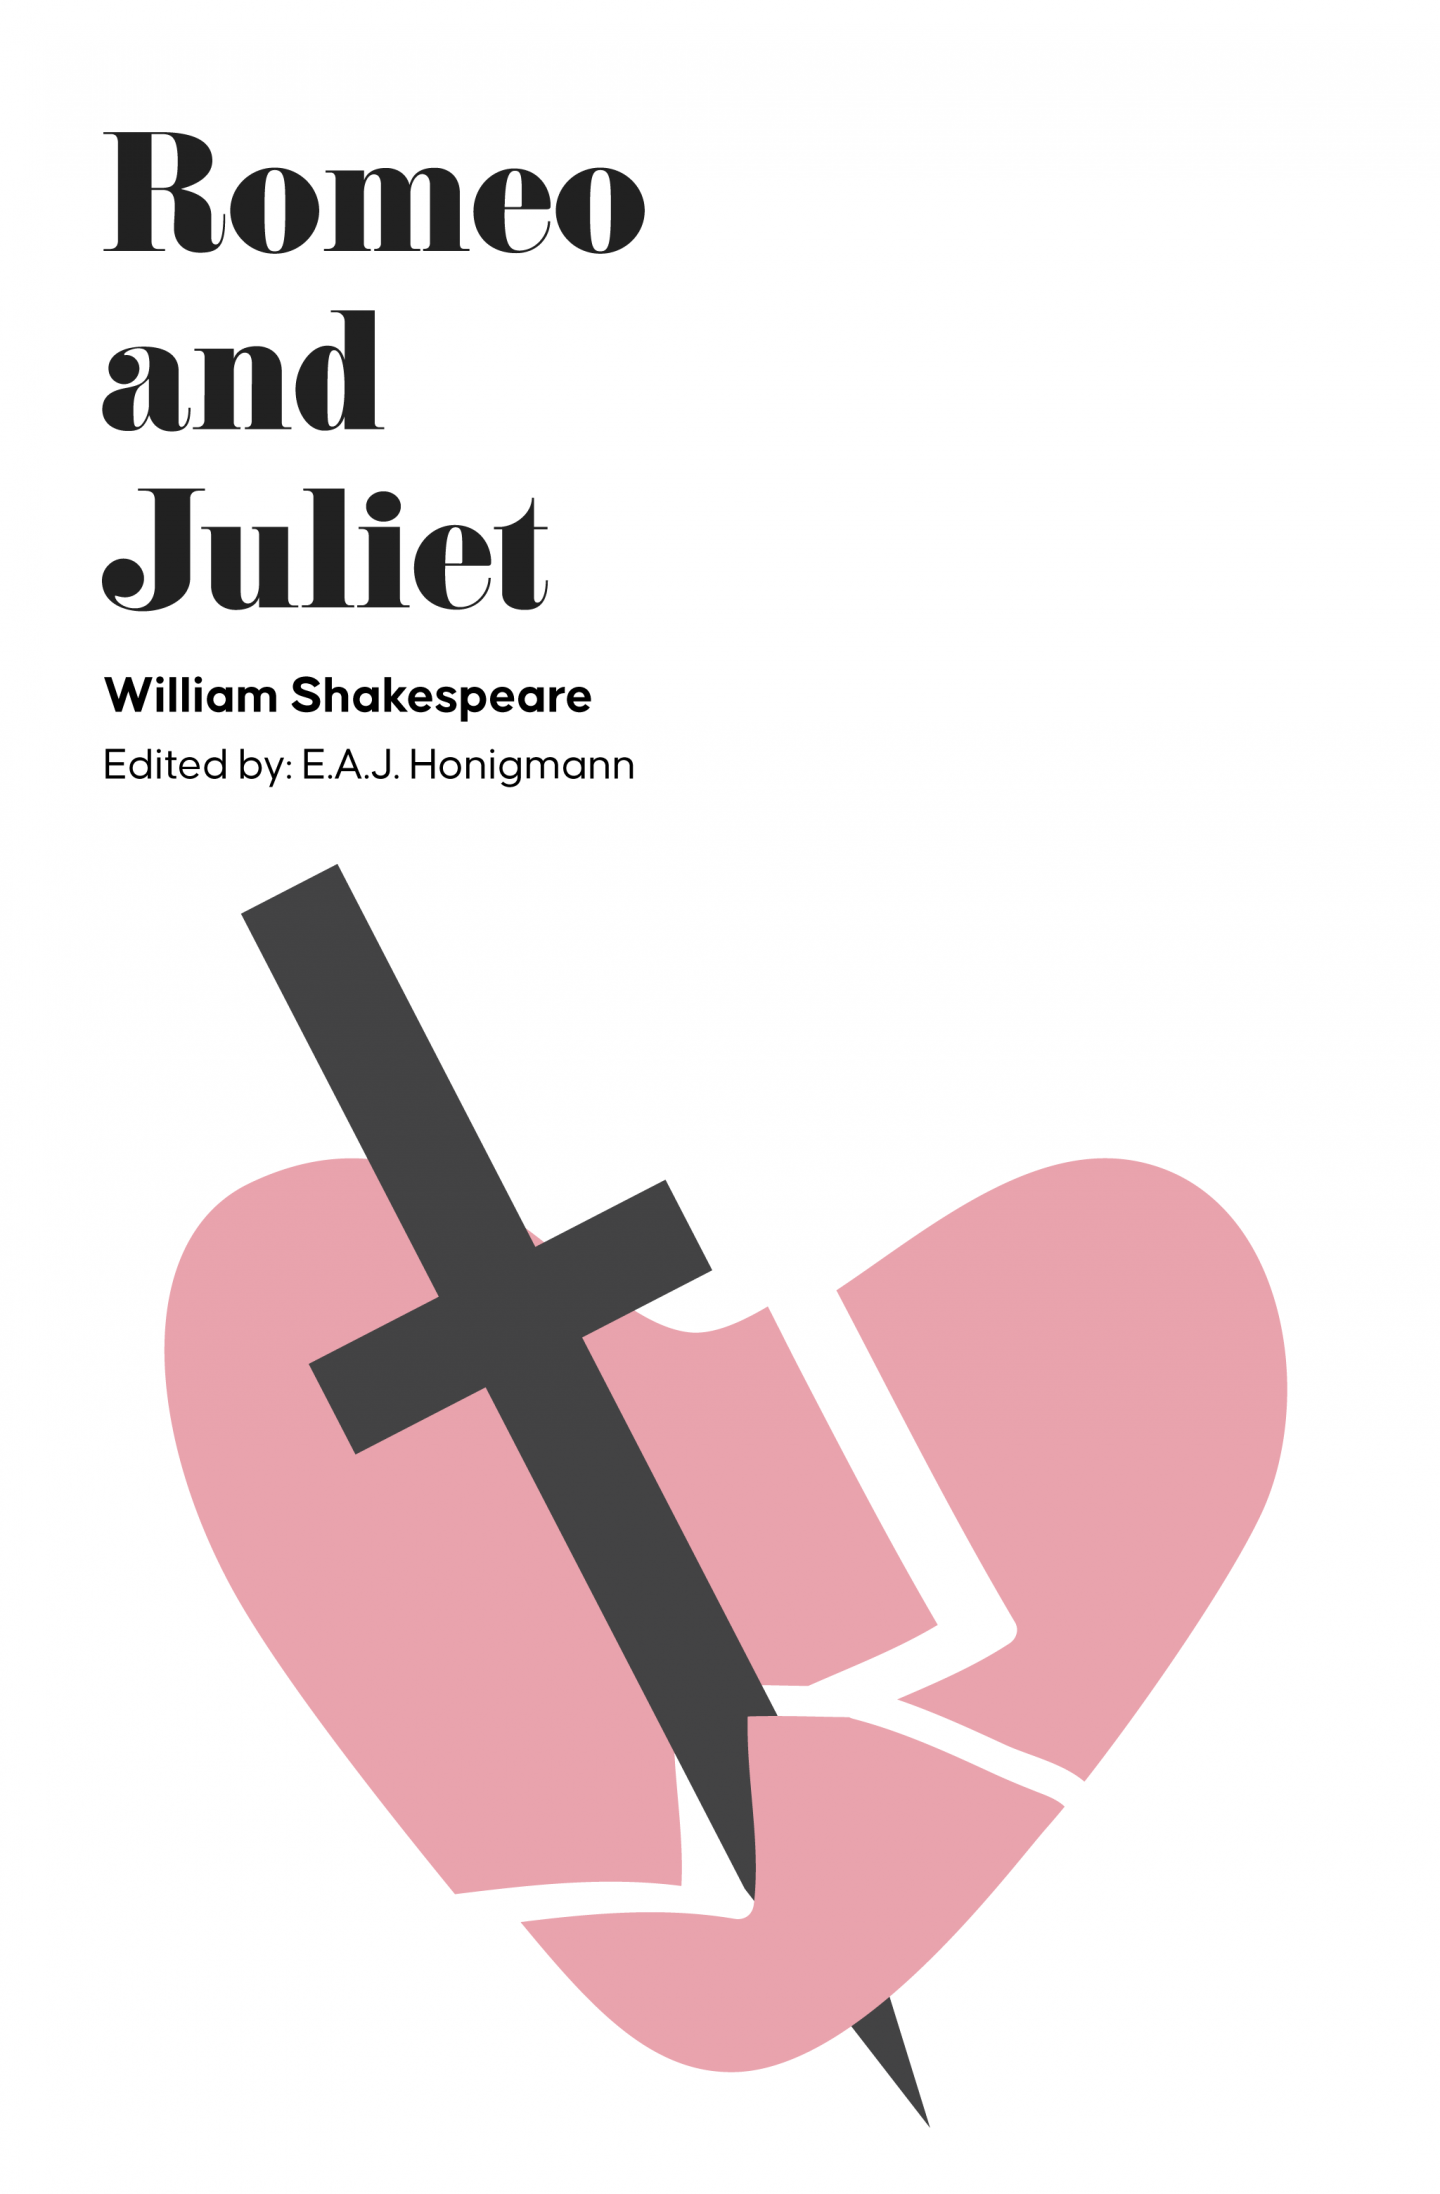 William Shakespeare's book covers